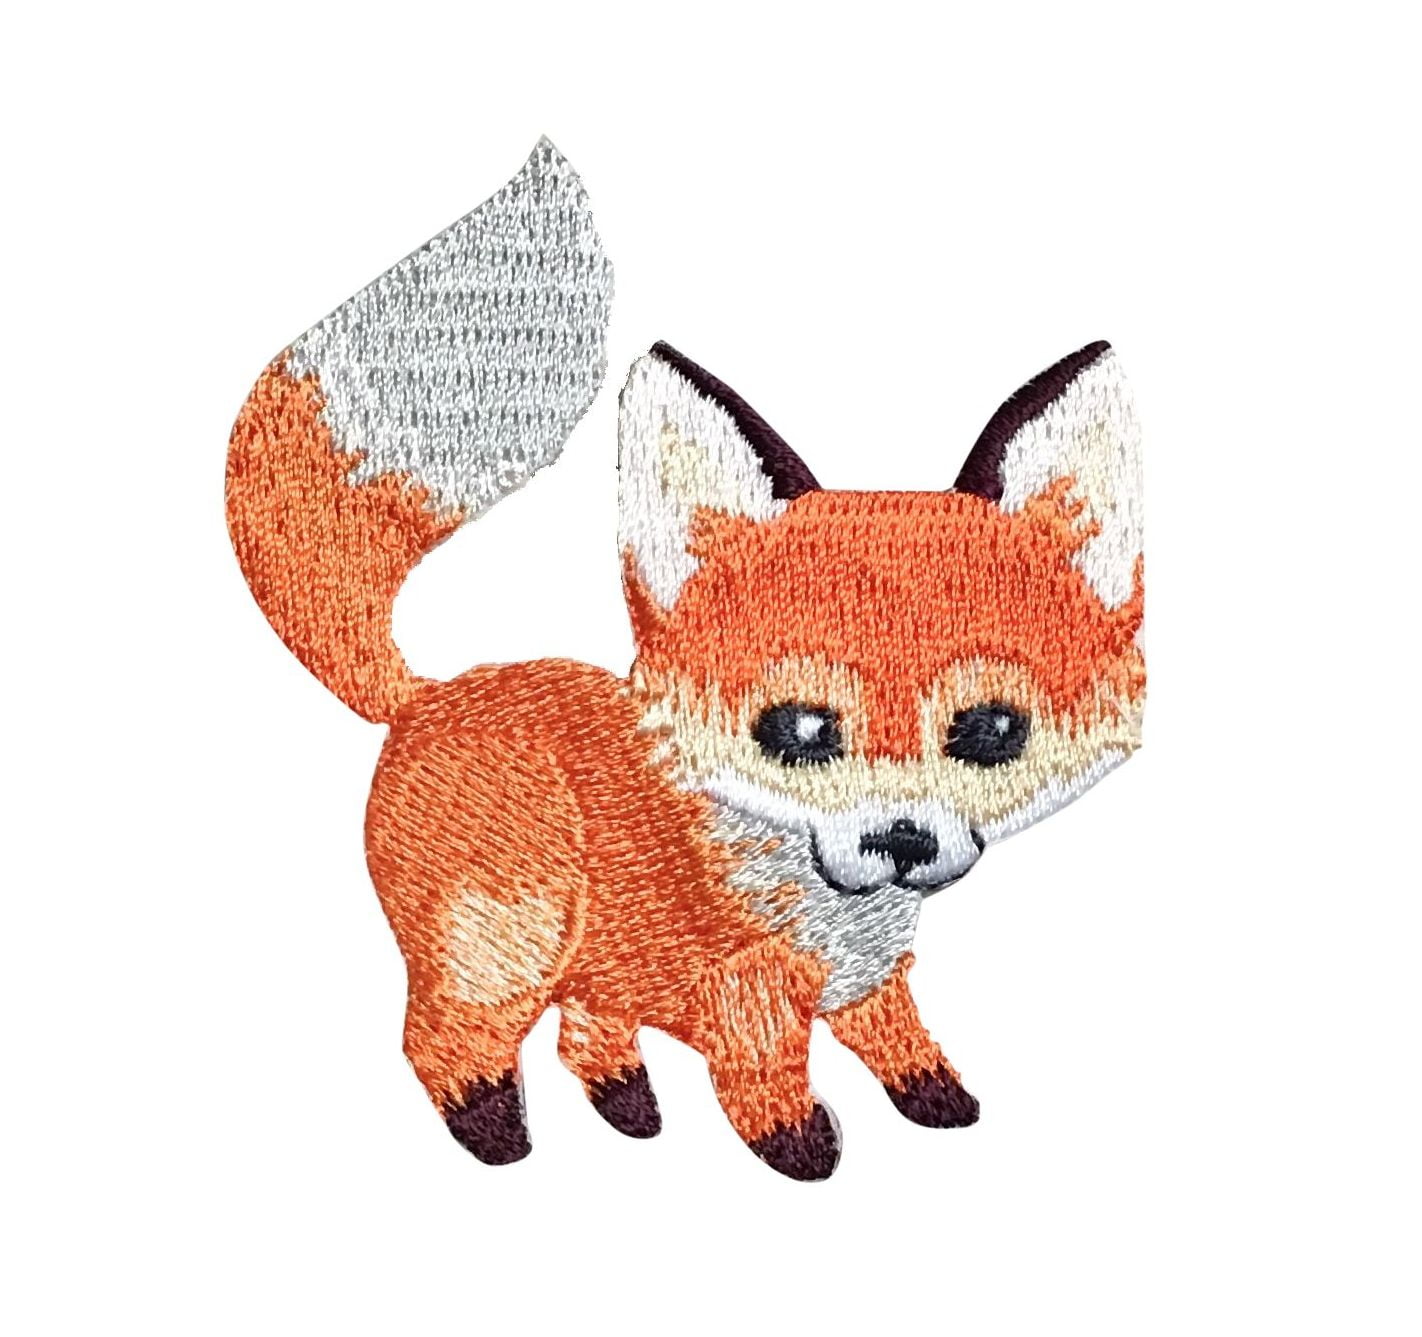 Flower Crown Fox Embroidered Bath Towel